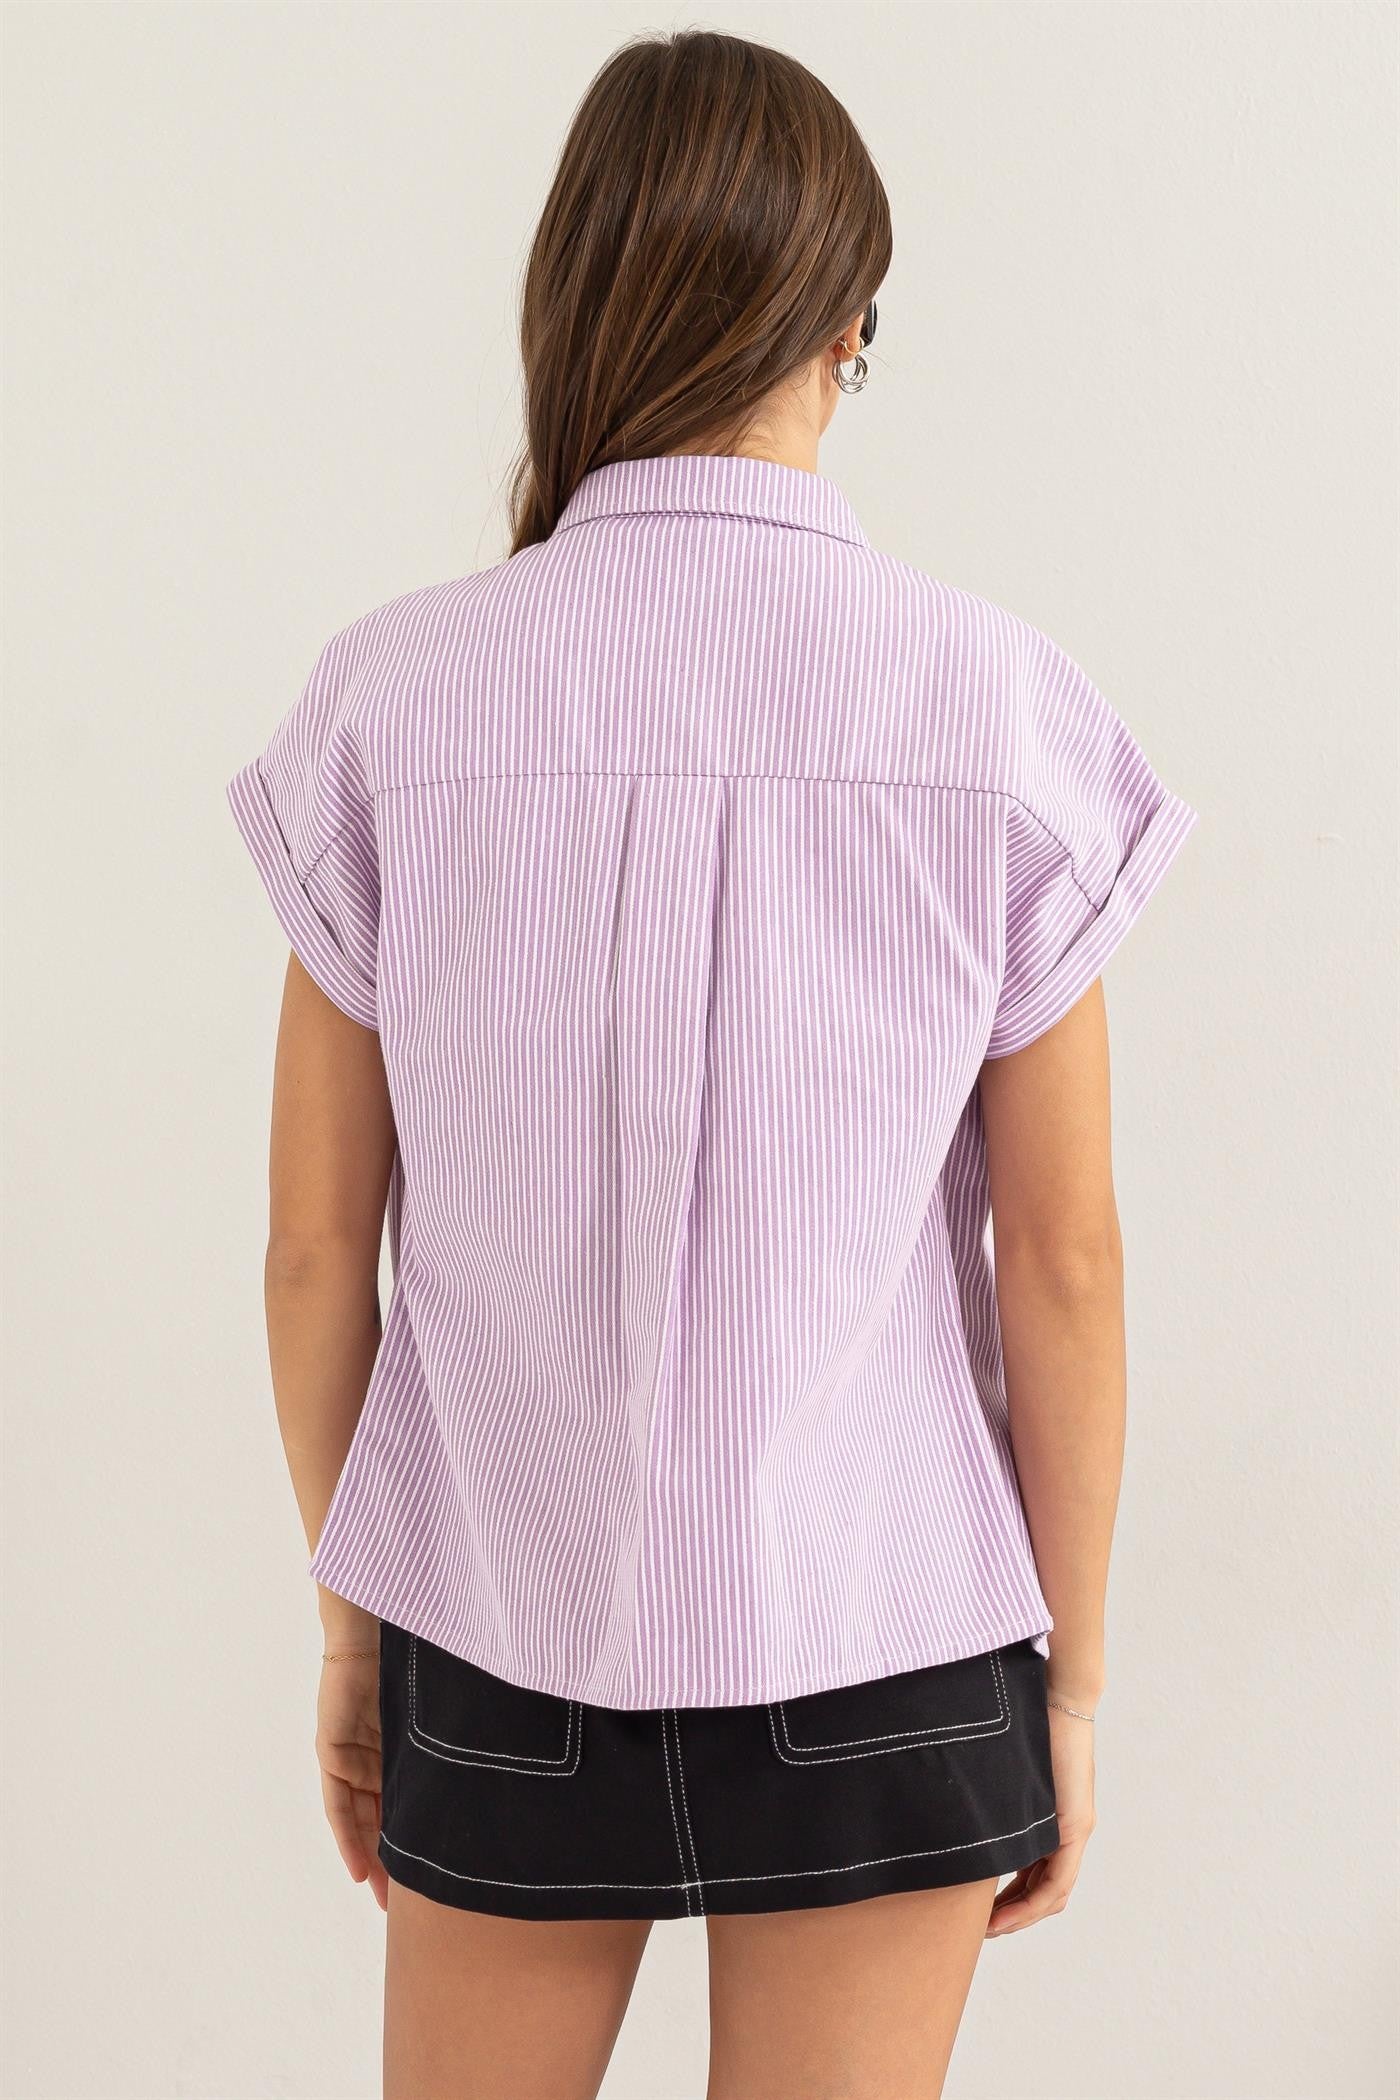 The Kendra Pin Stripe Denim Shirt